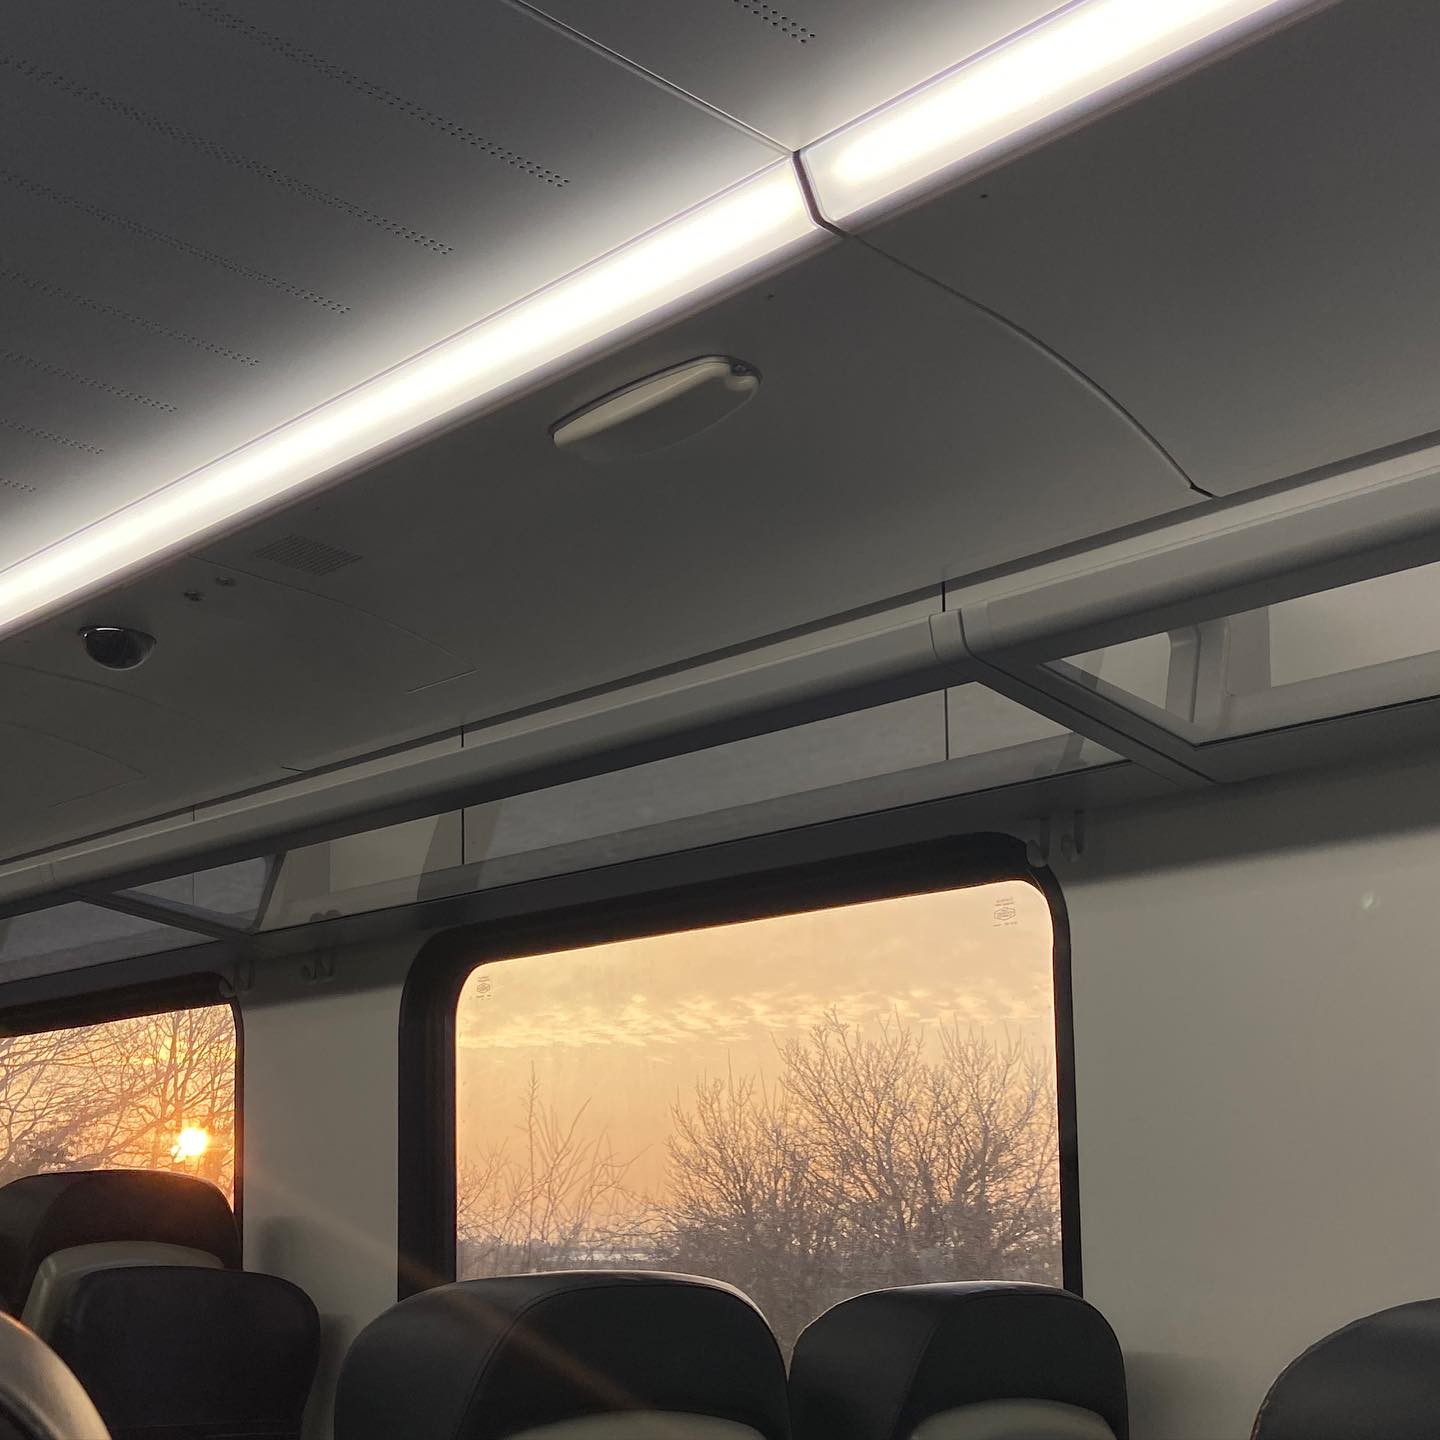 sunset peeks in train window, warm light contrasting with cool internal beams